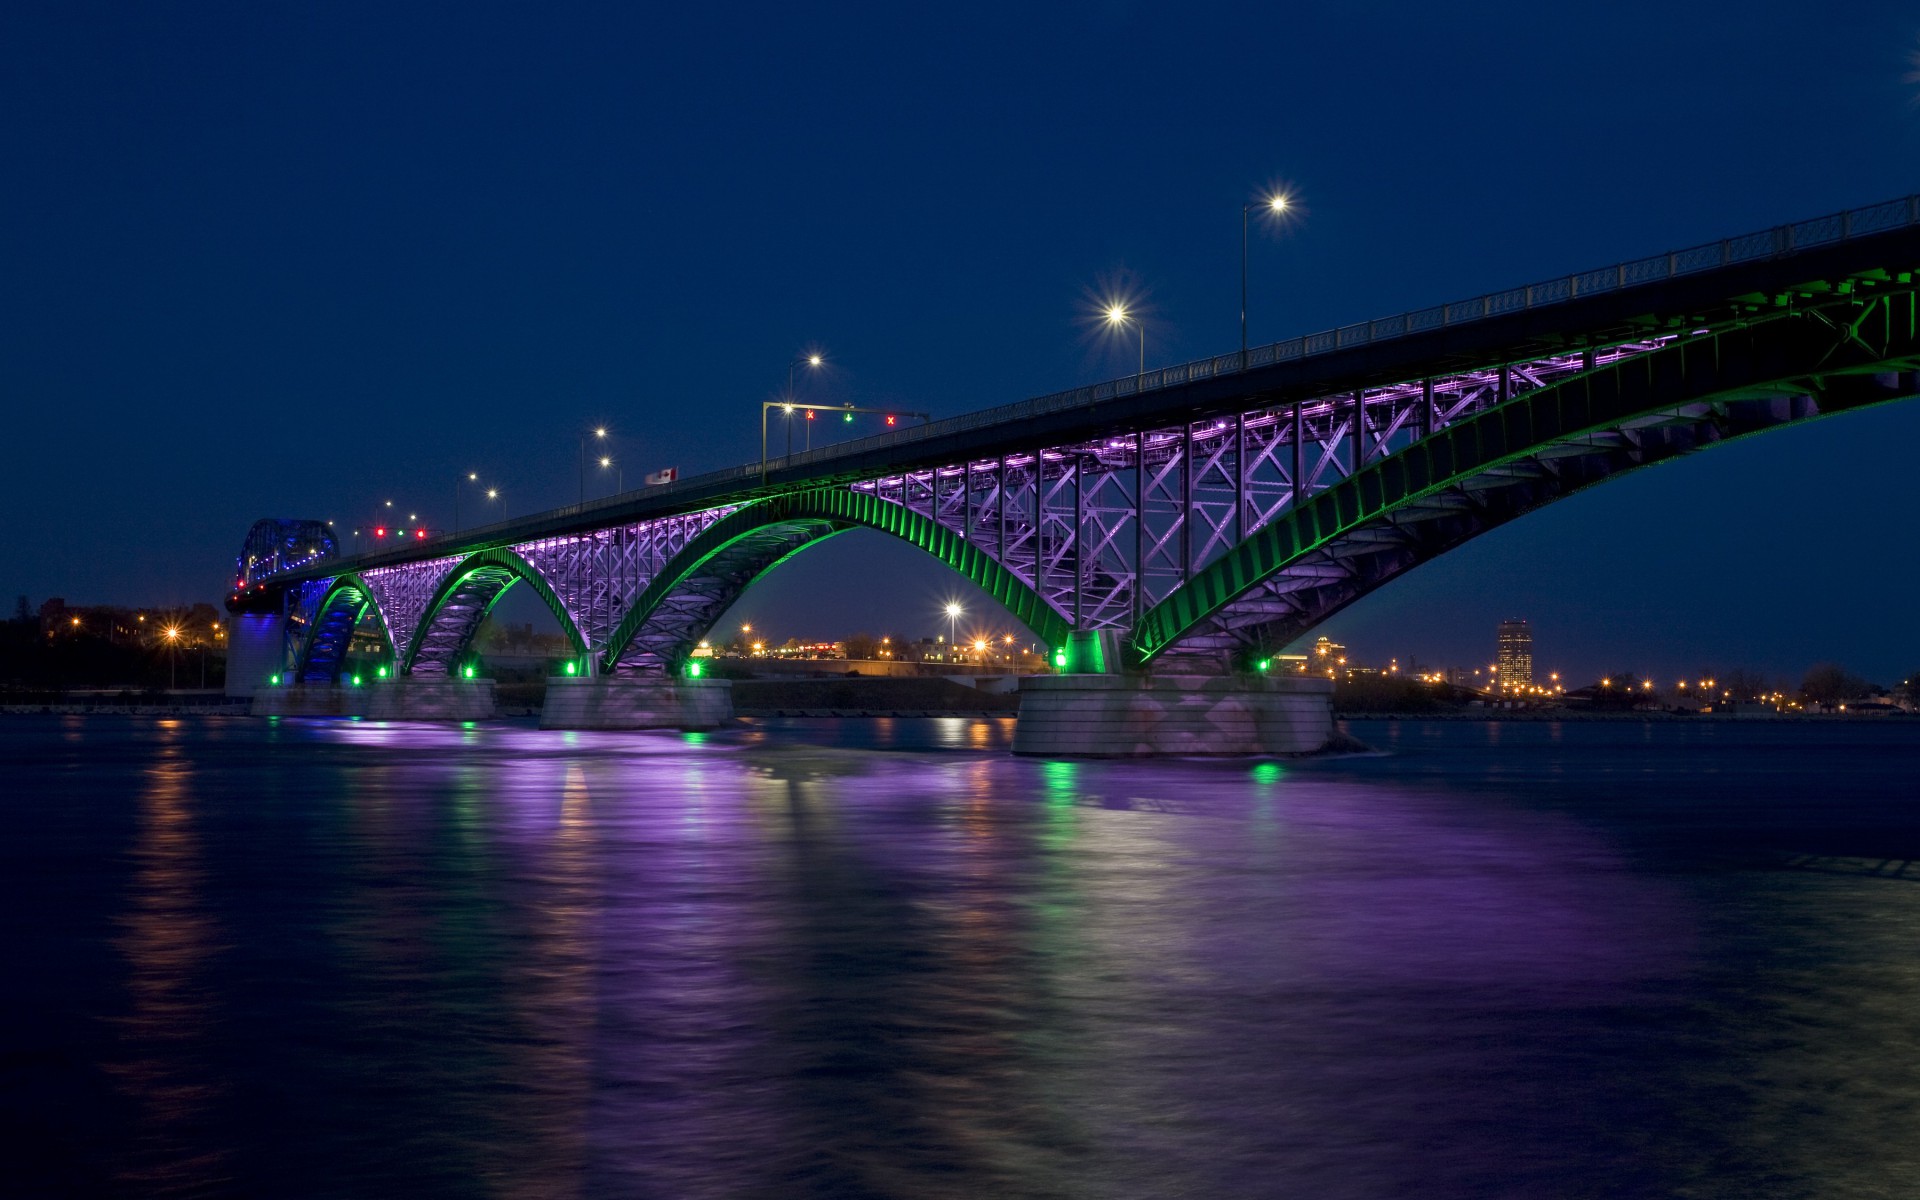 Free photo A large illuminated bridge over the river at night